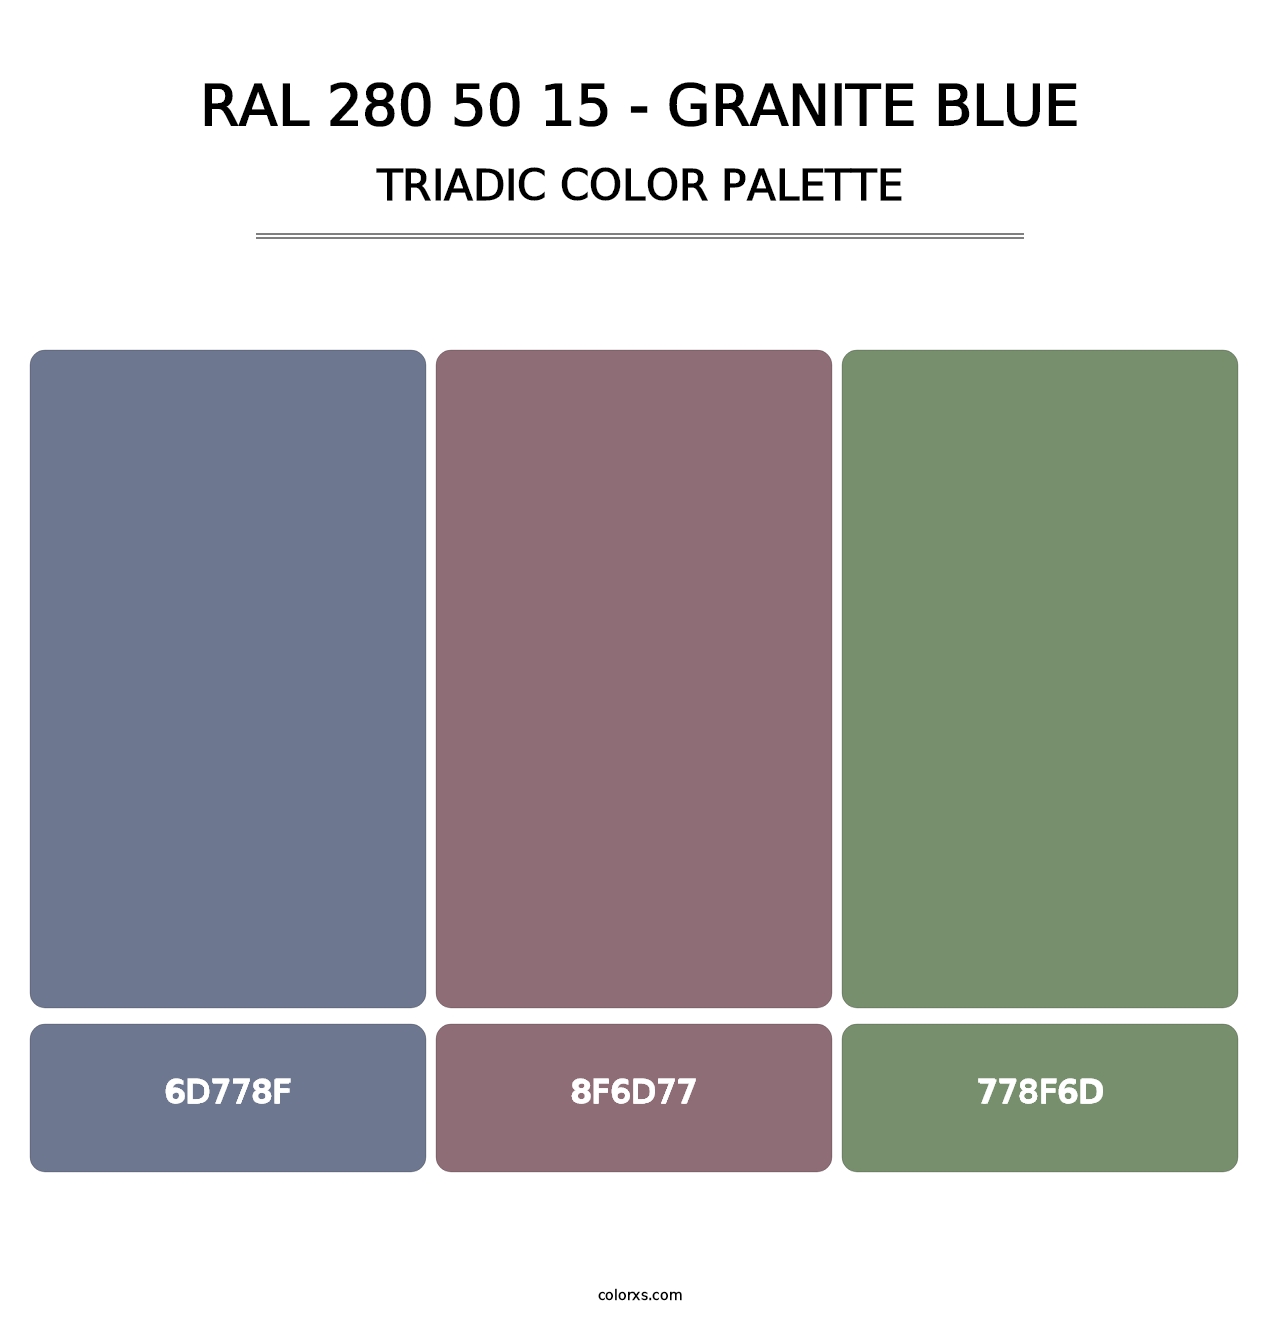 RAL 280 50 15 - Granite Blue - Triadic Color Palette